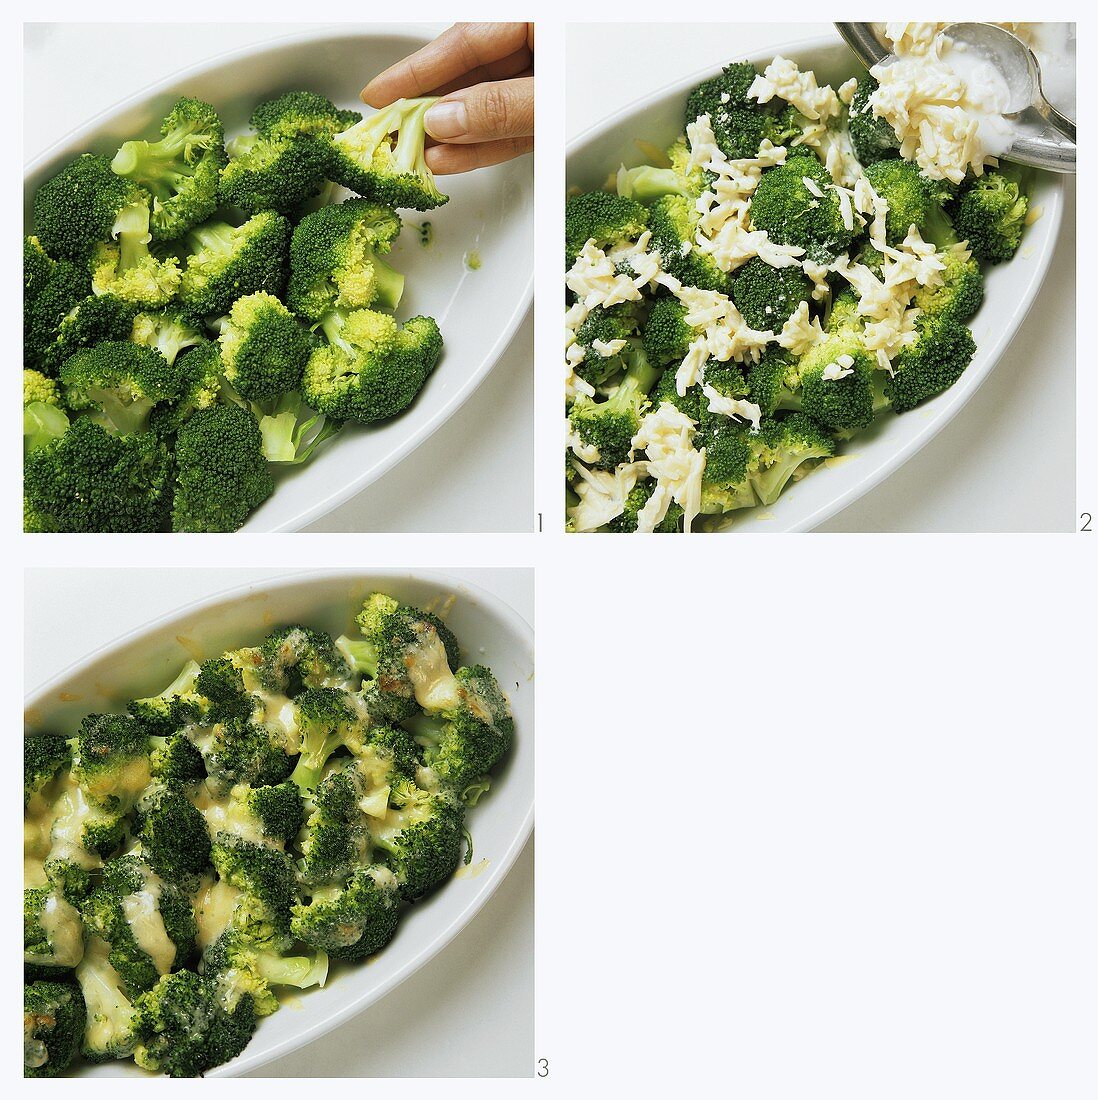 Making broccoli gratin